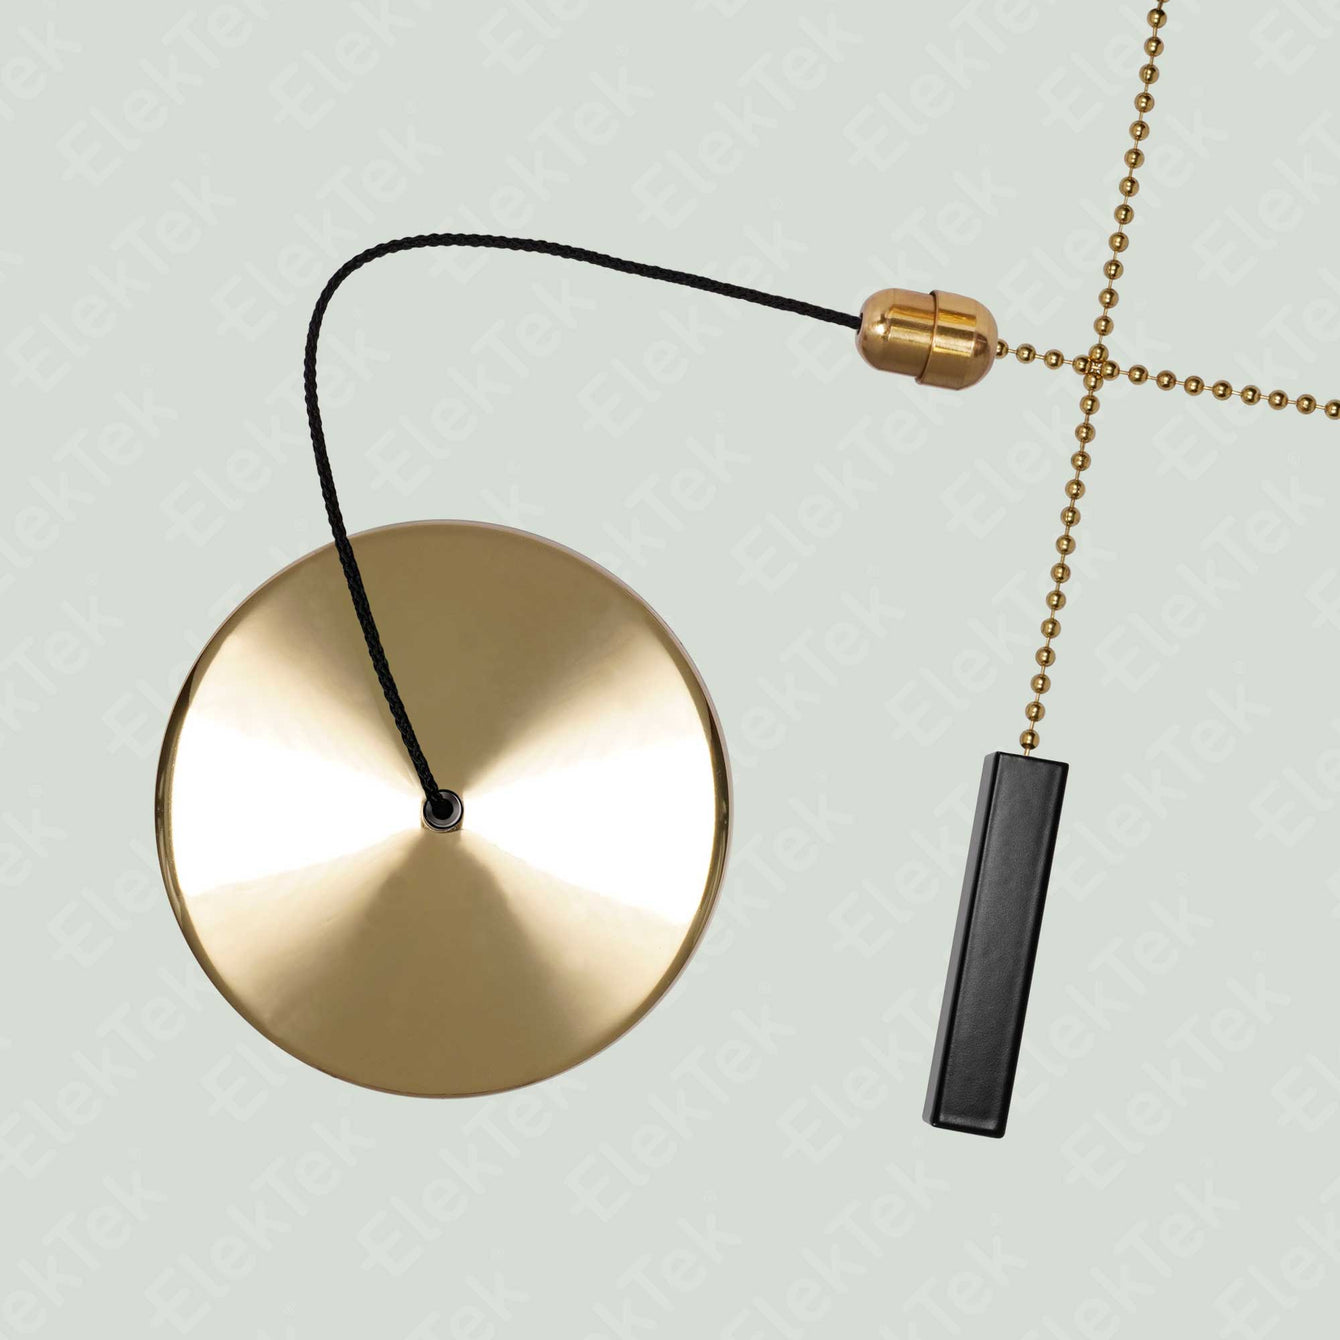 ElekTek Premium Brass Bathroom Light Pull Cord Switch Kit with Pull Chain Handle Black Square Bar / Black Cord